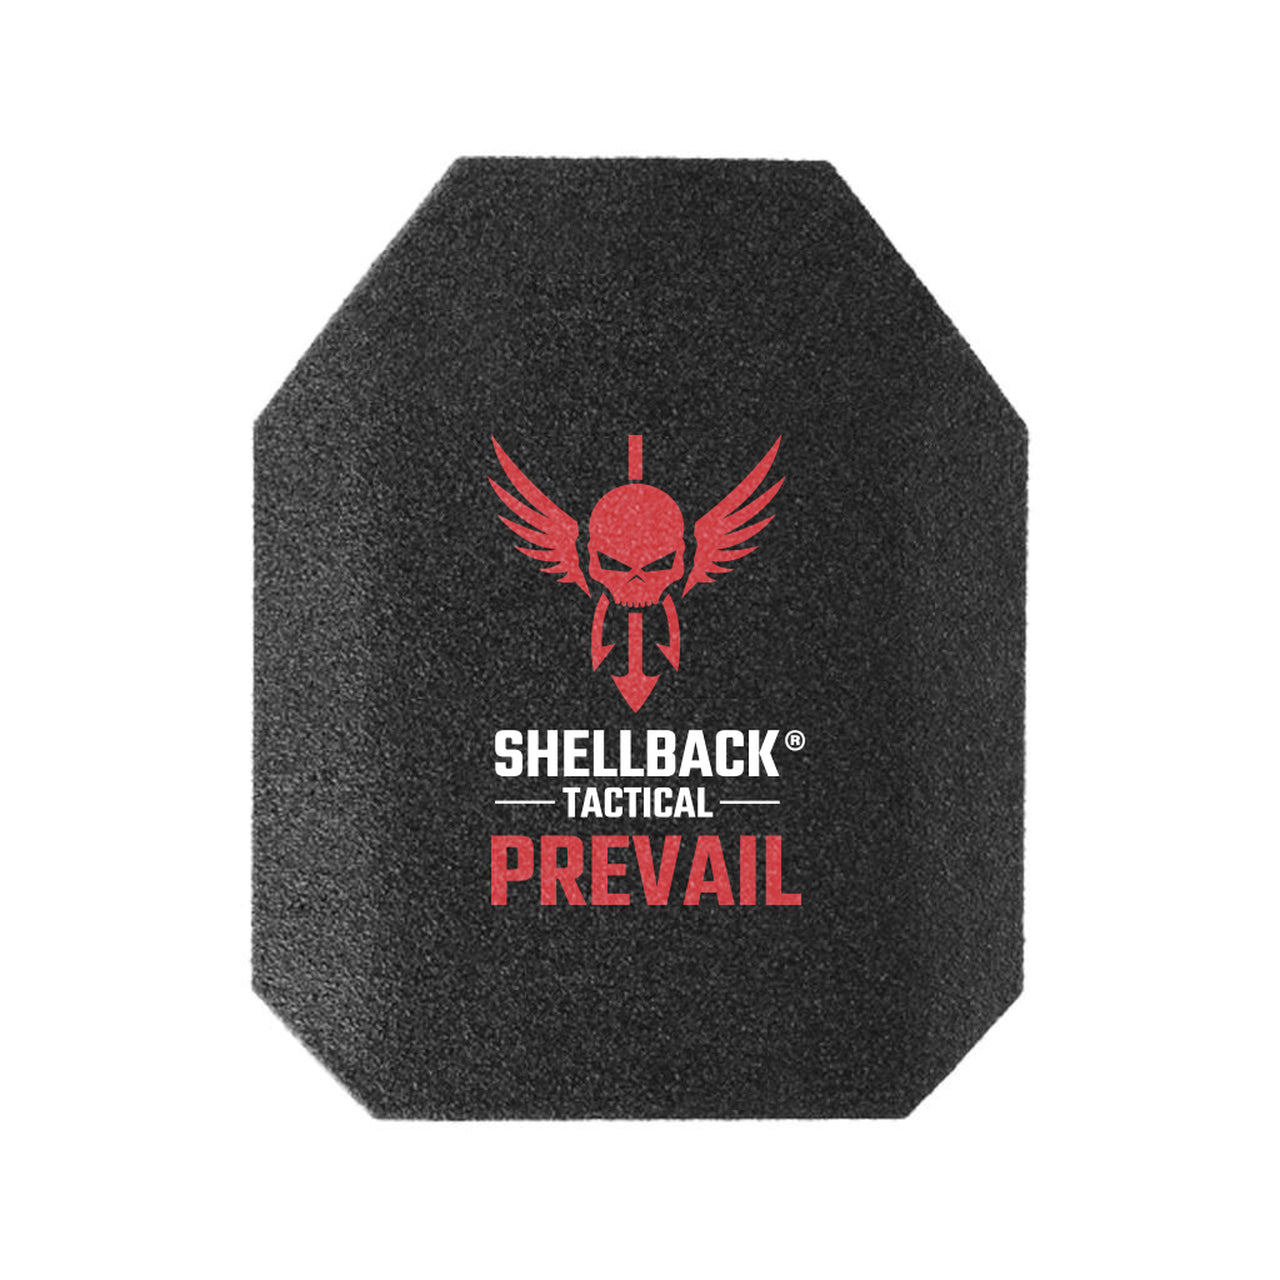 Shellback Tactical Prevail Series Level III+ Single Curve Hard Armor Plates.